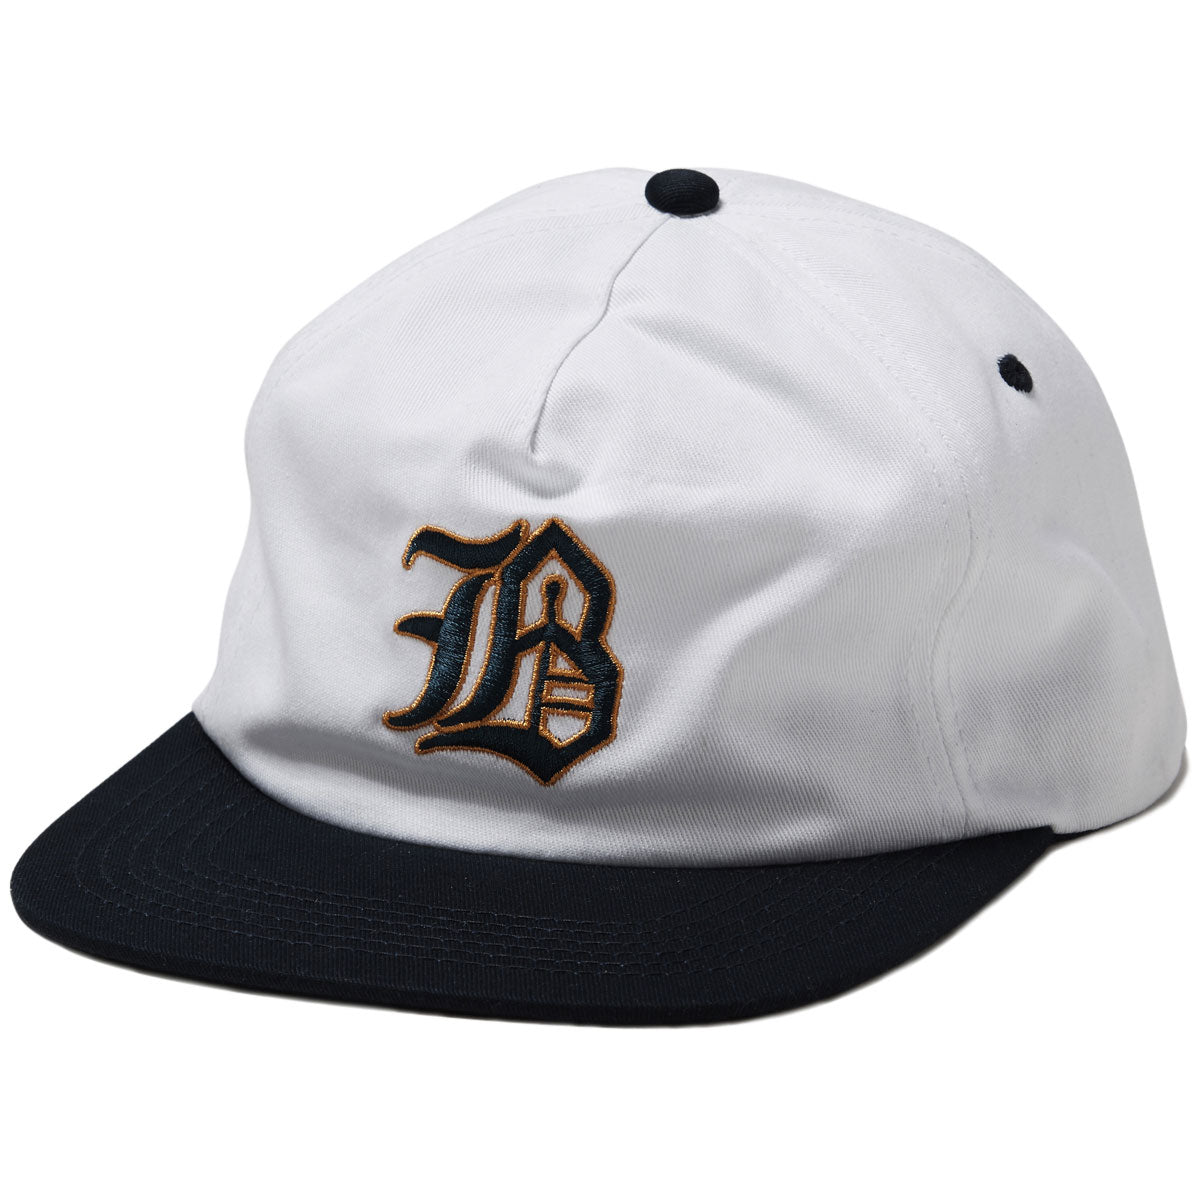 Baker Big B Snapback Hat - White/Navy image 1